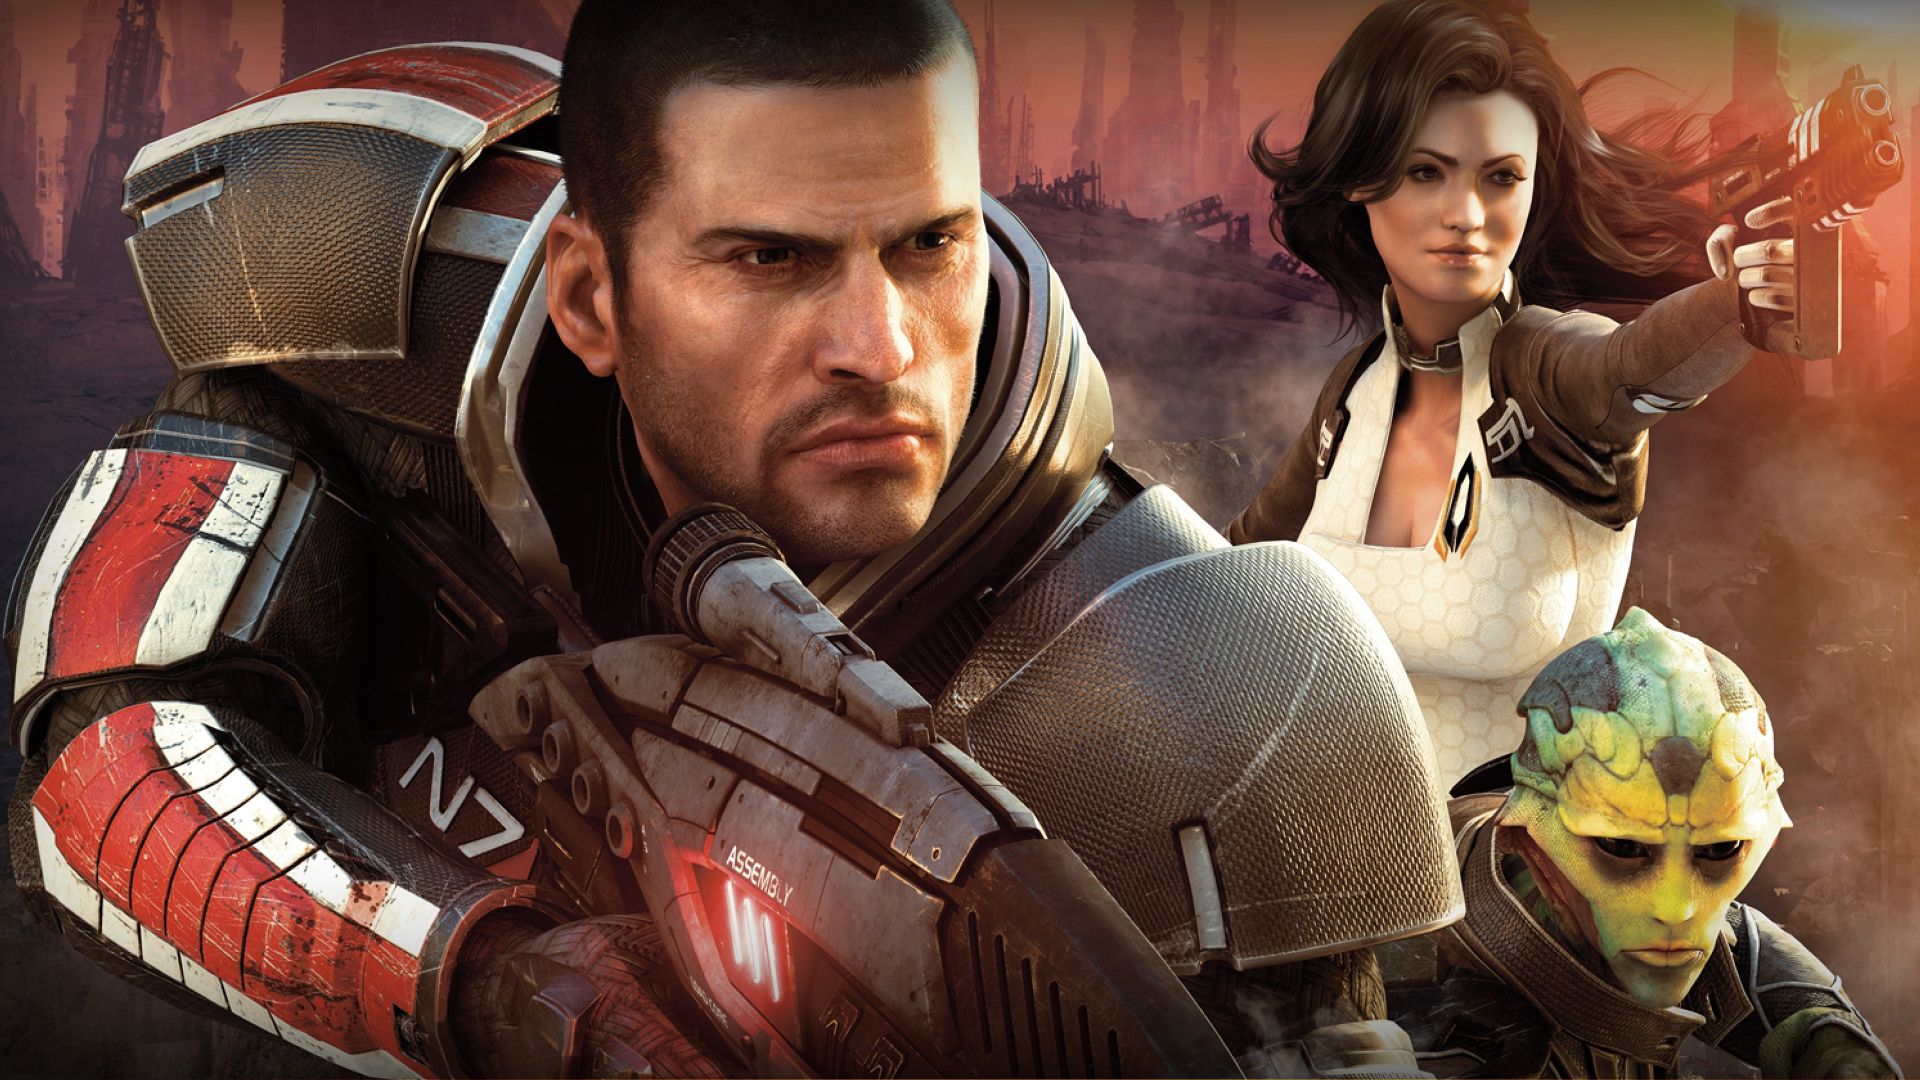 Rol Yapma Oyunu Mass Effect 2, 14 Yaşında! Image